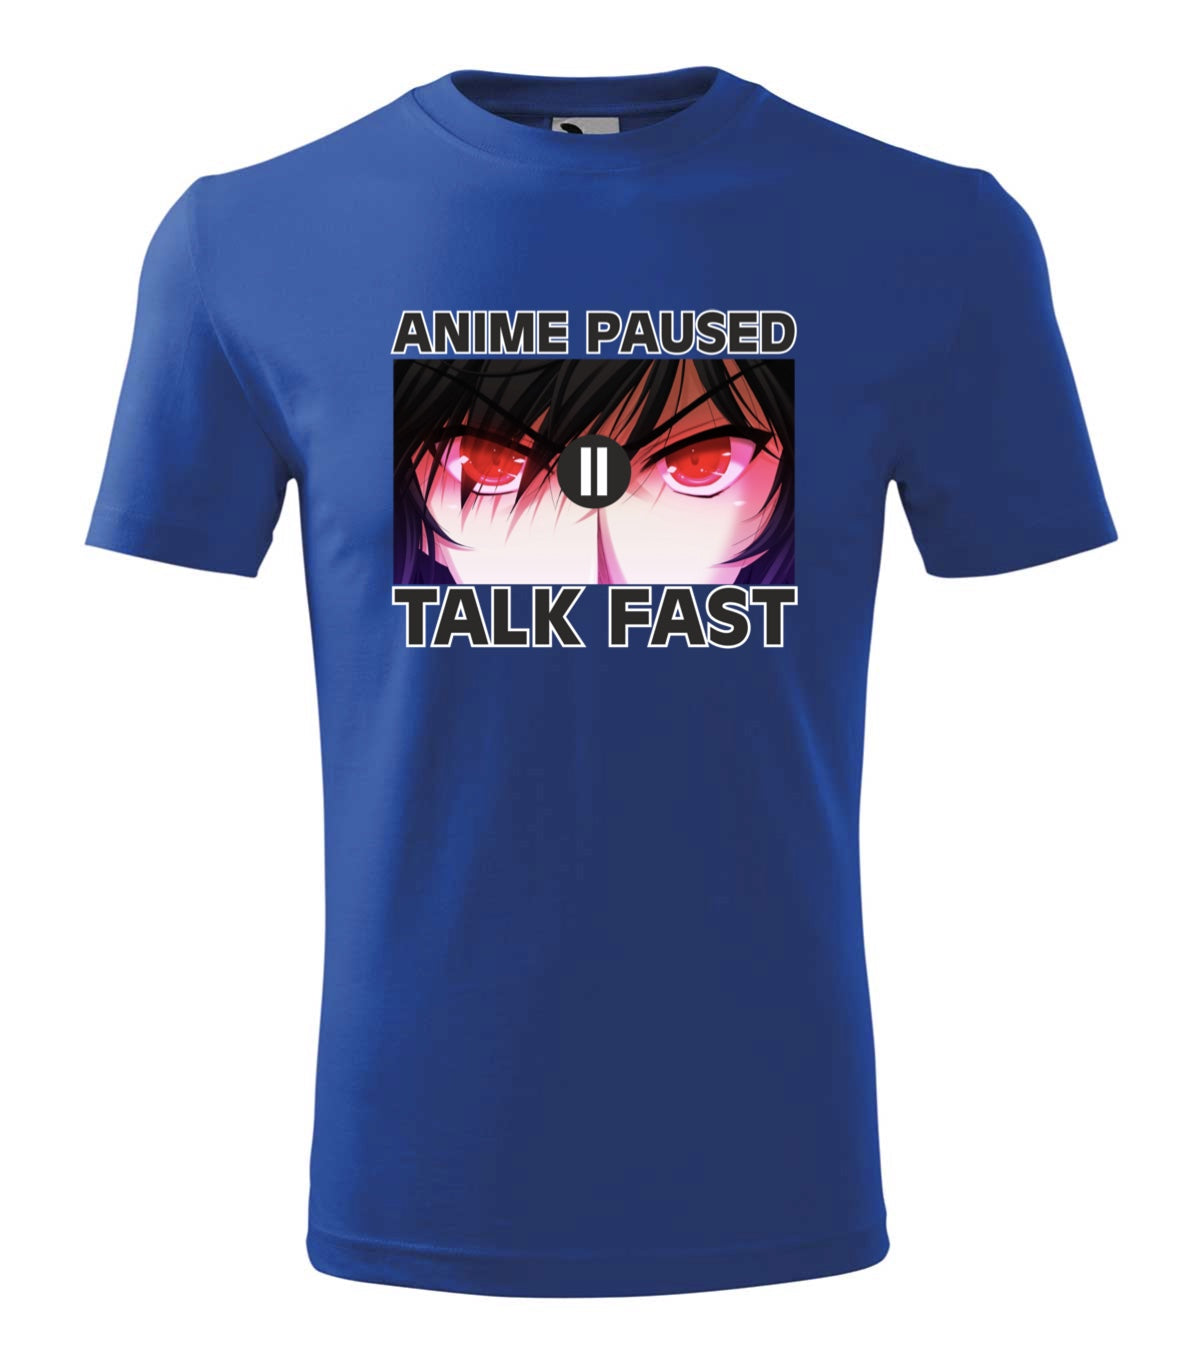 Anime Paused férfi technikai póló